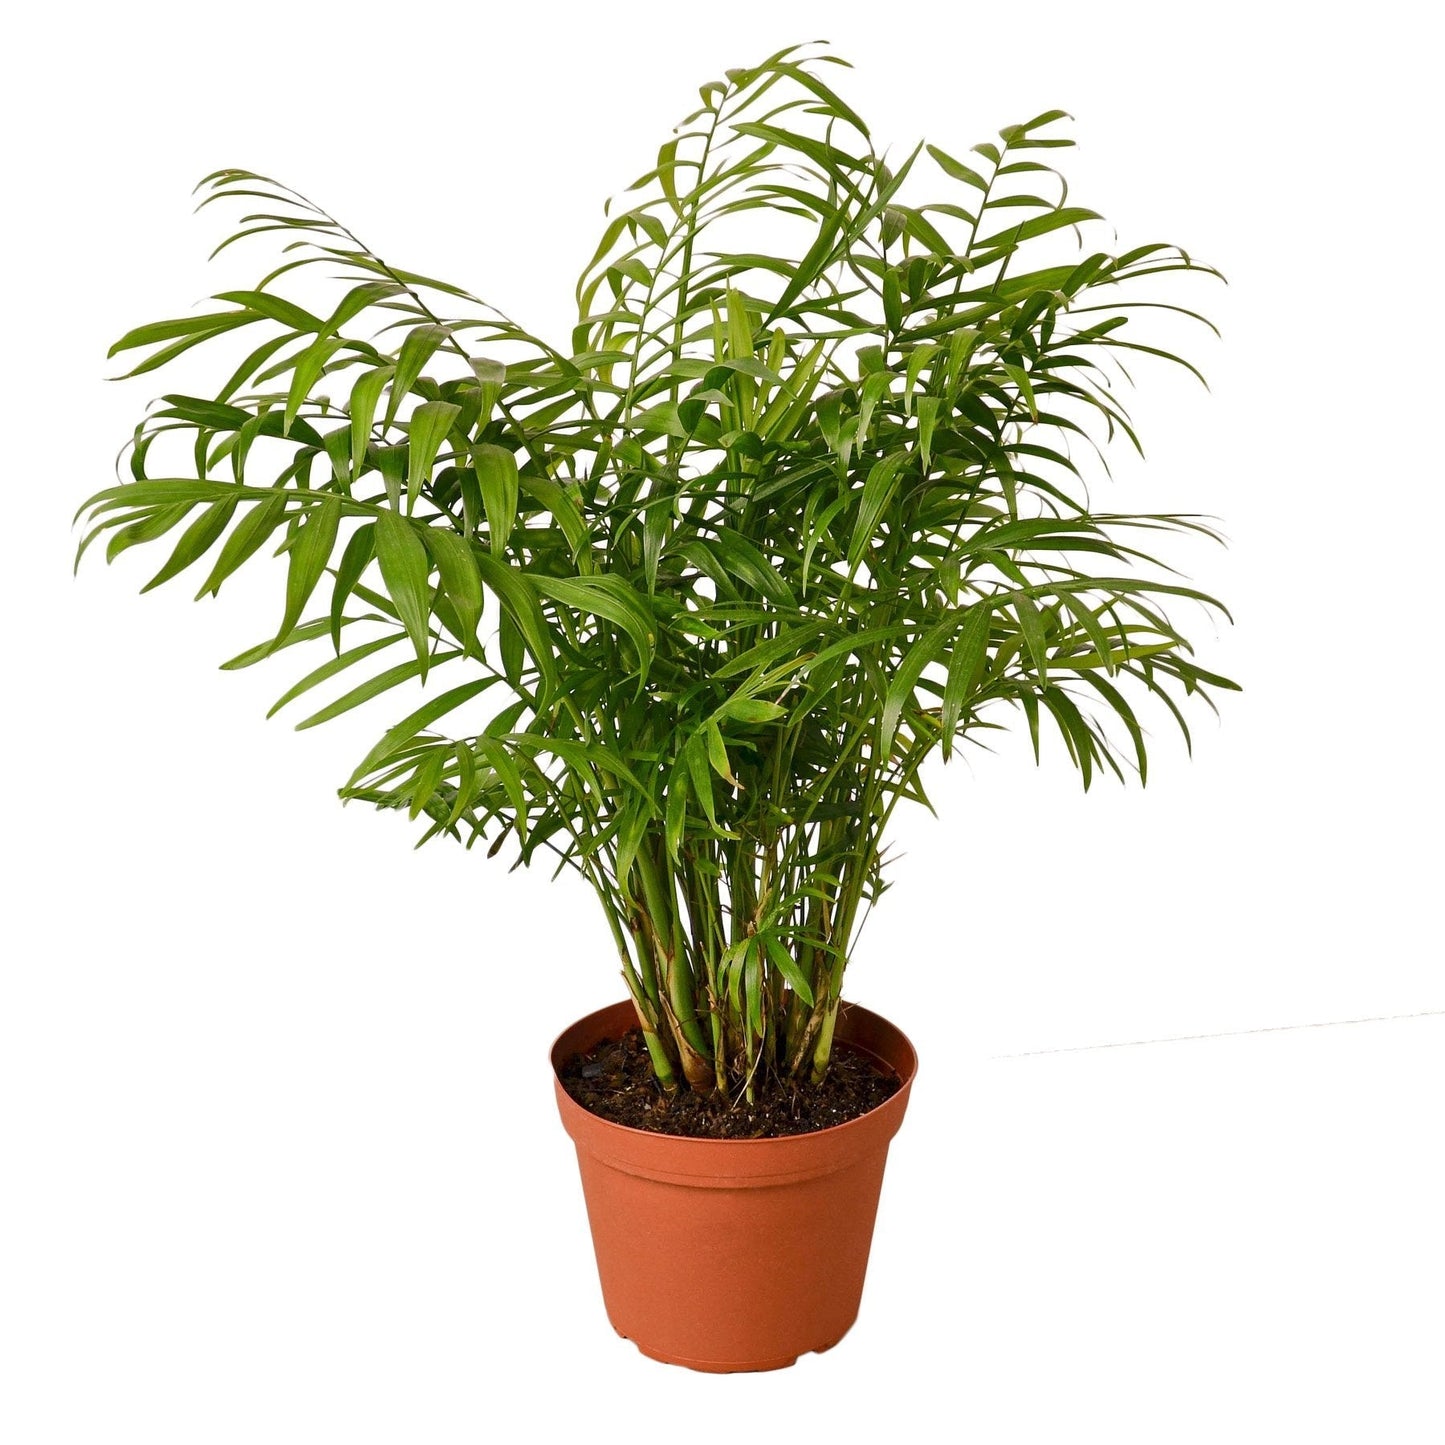 Parlor Palm - 6" Pot - NURSERY POT ONLY - One Beleaf Away Plant Studio